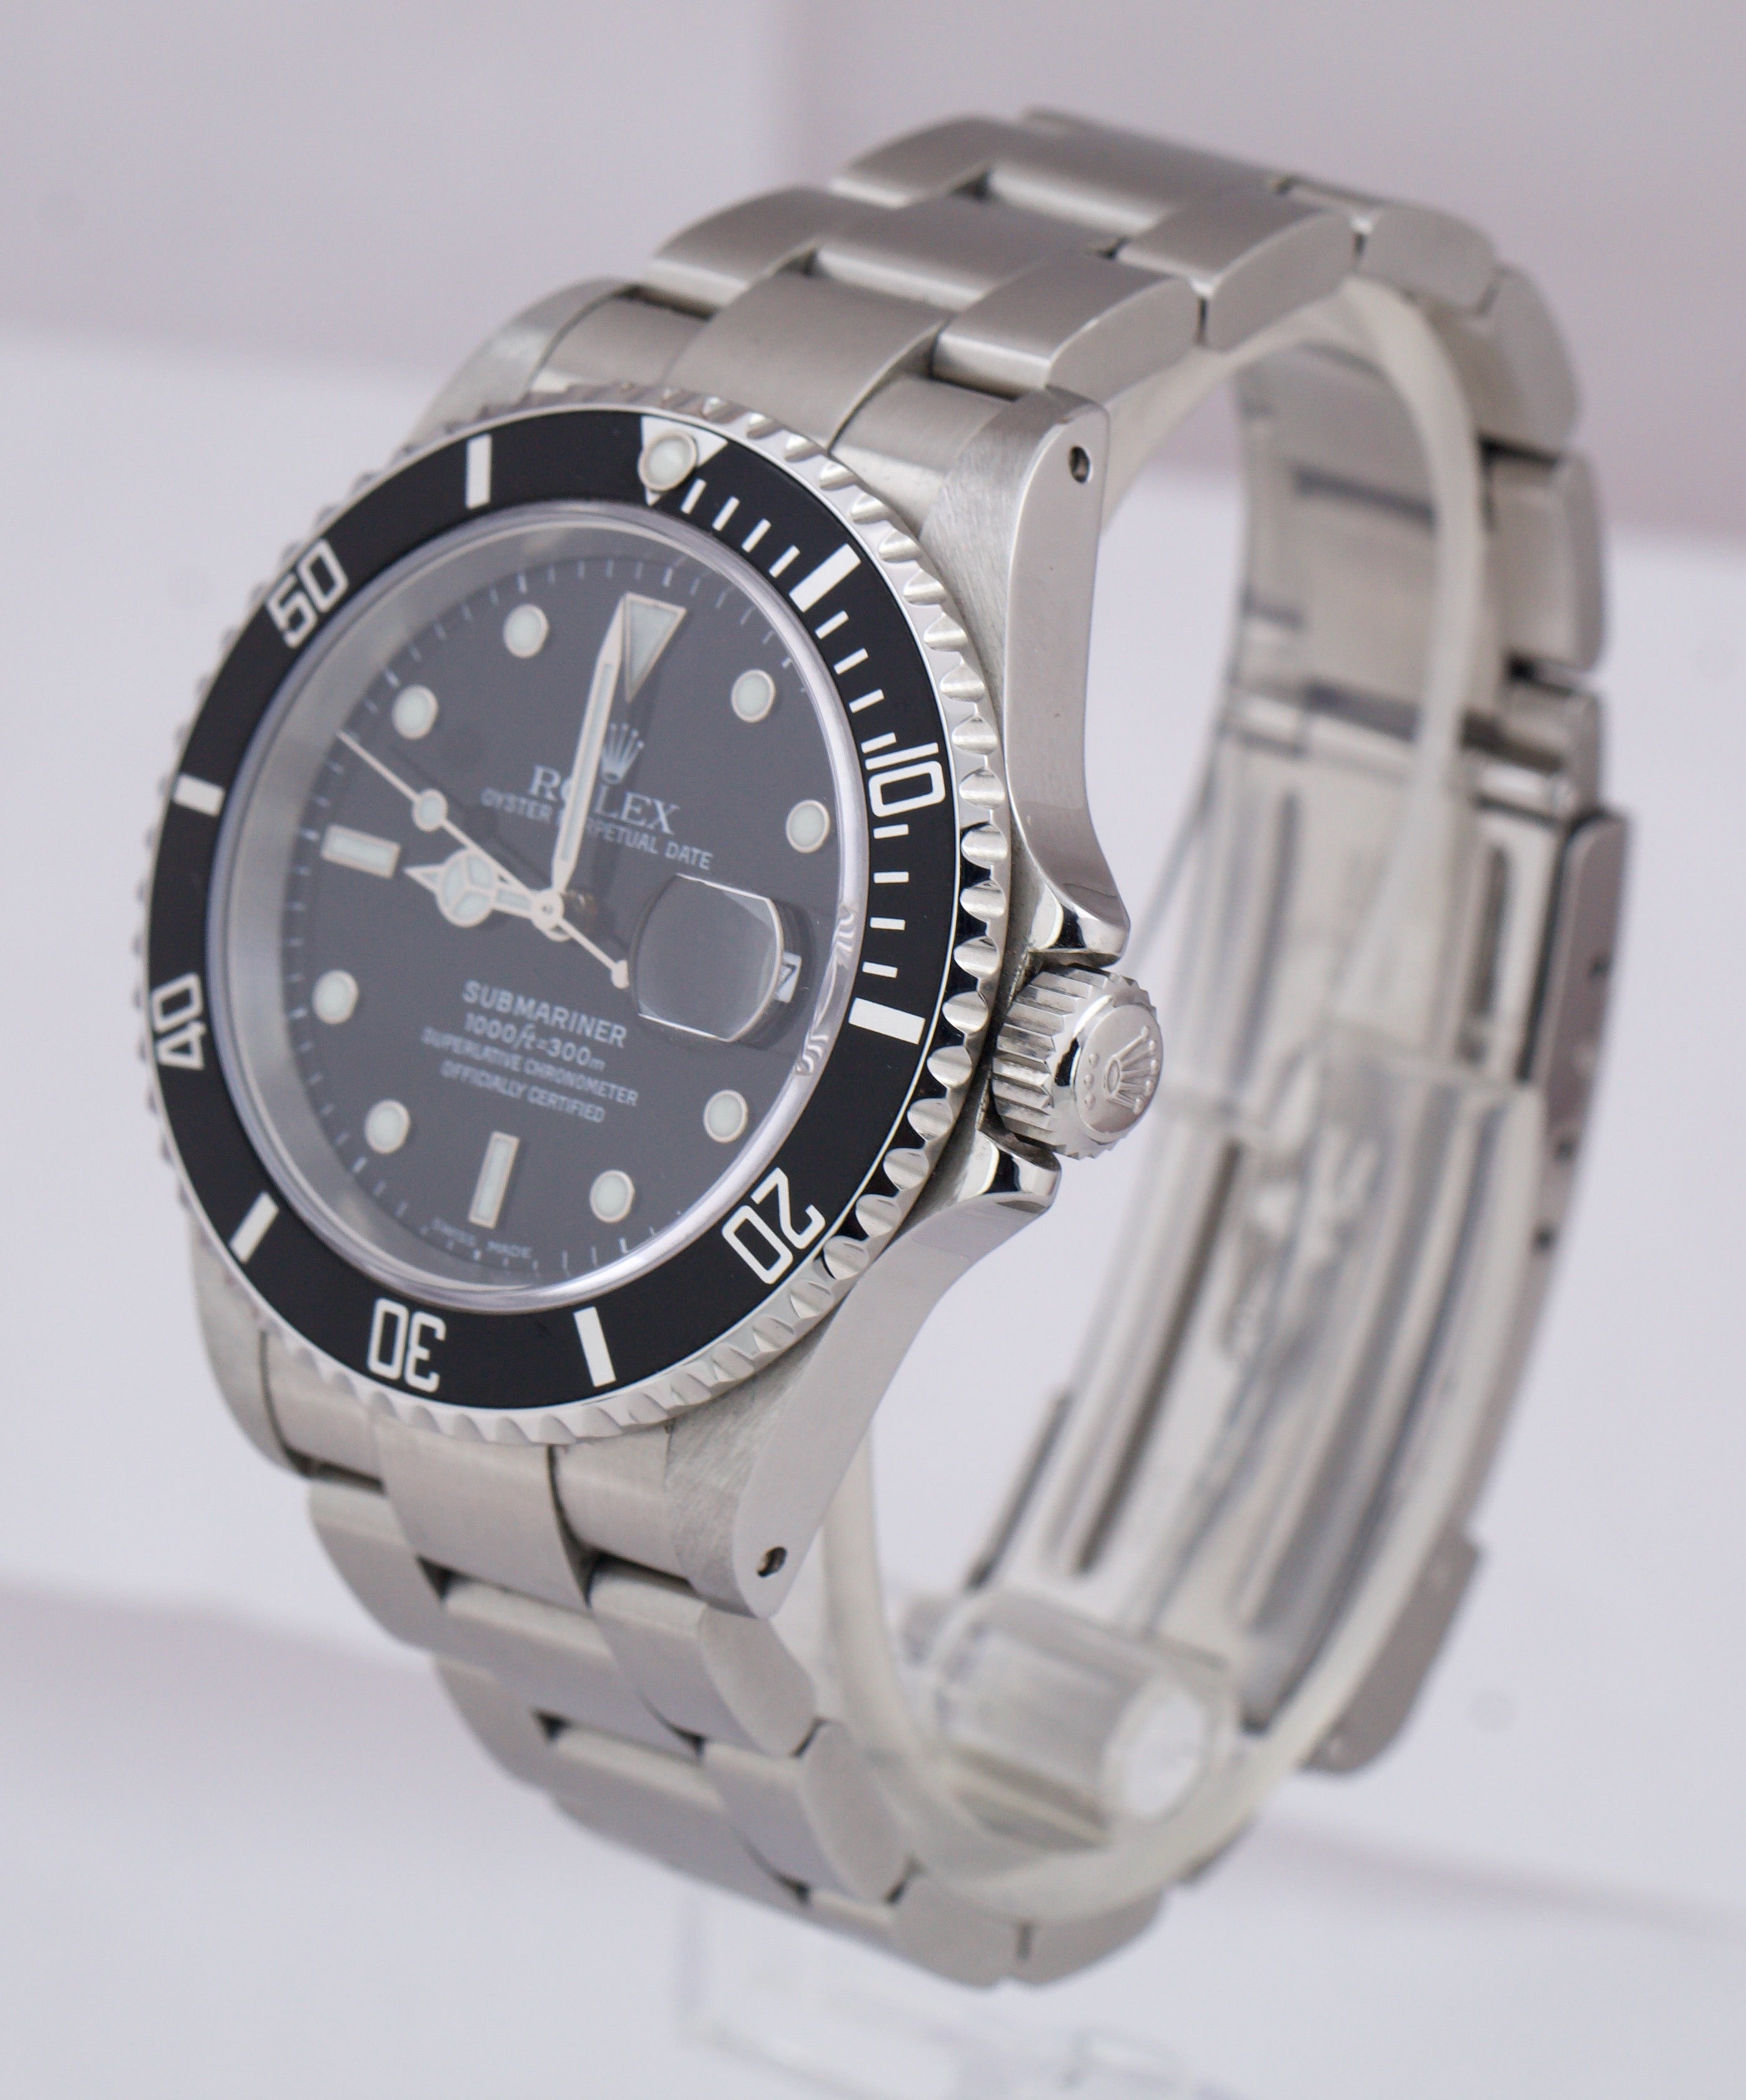 2020 RSC SERVICE Rolex Submariner Date 16610 40mm Black Stainless Steel Watch